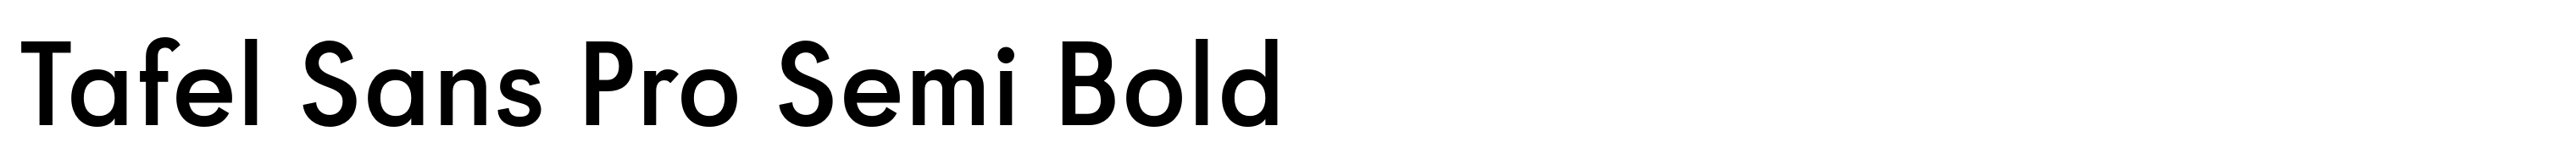 Tafel Sans Pro Semi Bold